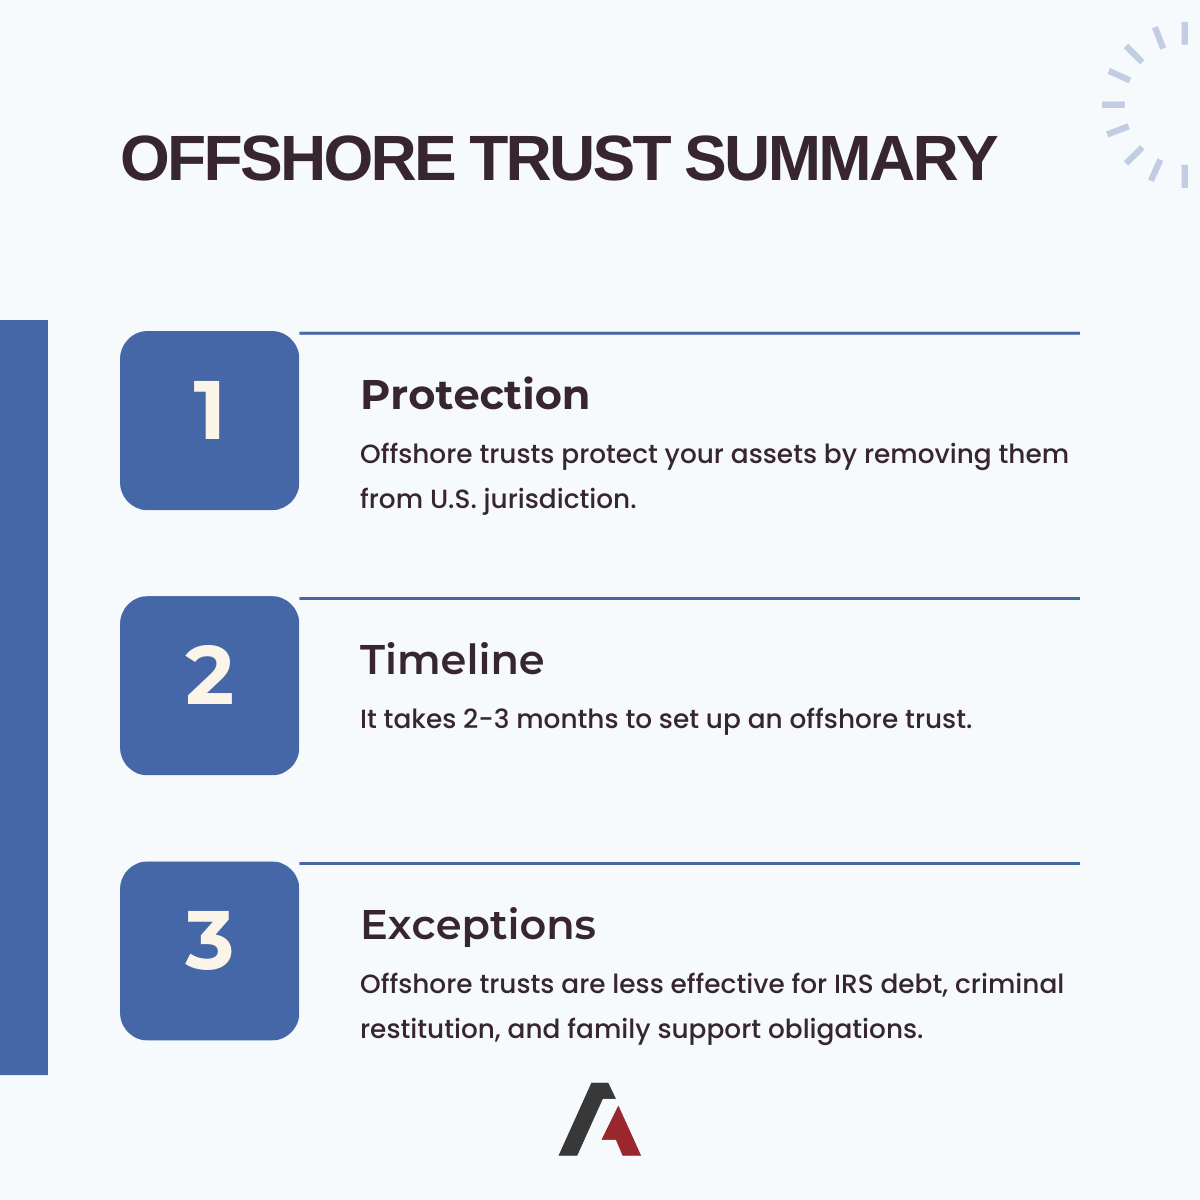 Offshore trust summary